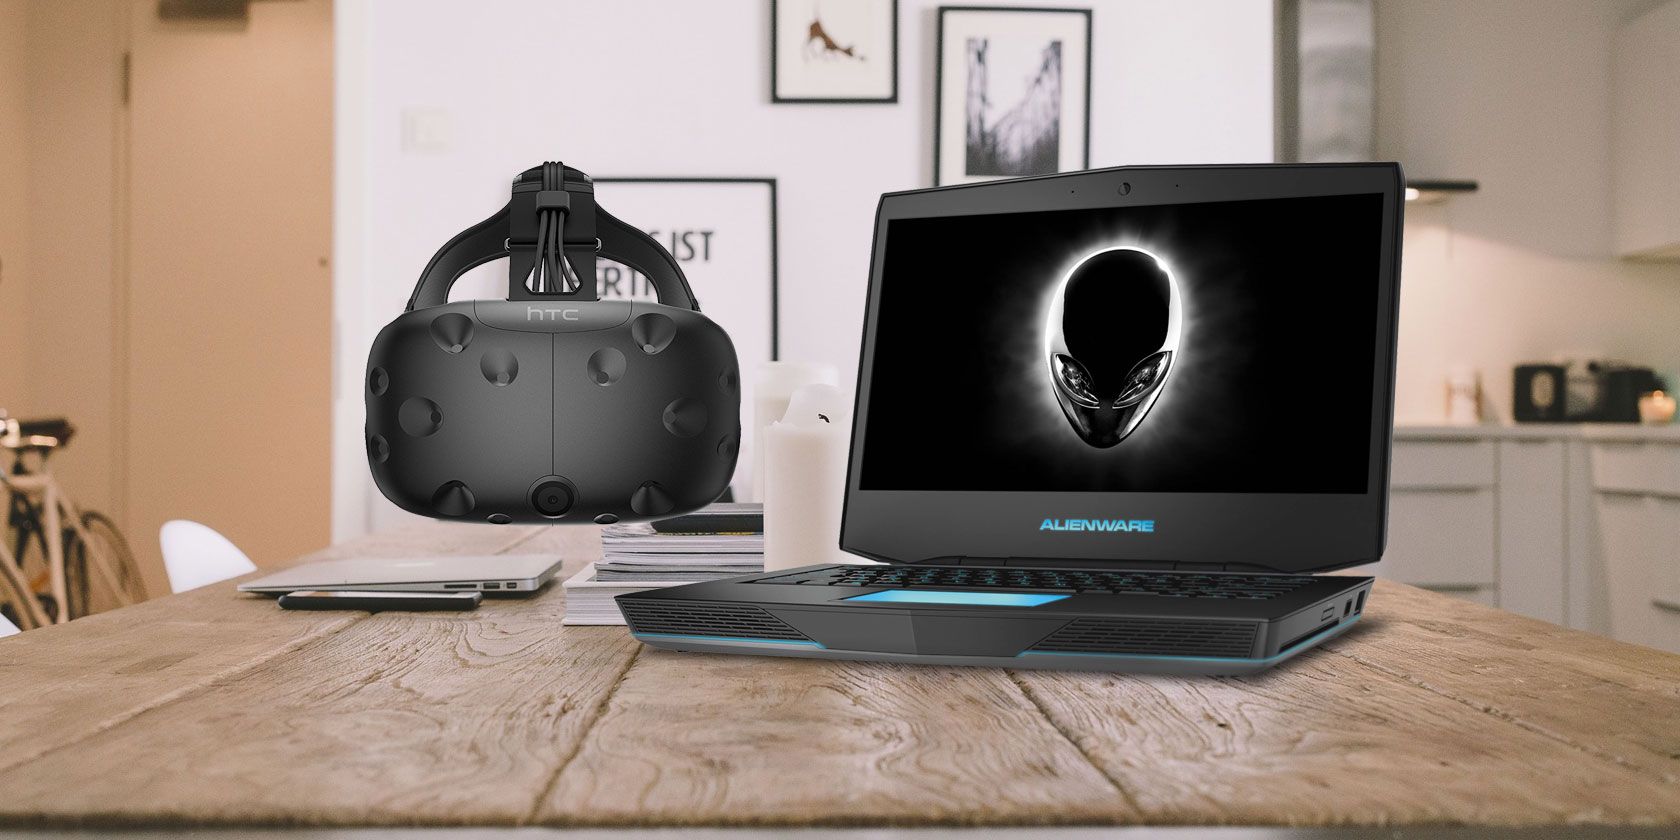 Gaming laptop and HTC Vive VR headset resting on desktop